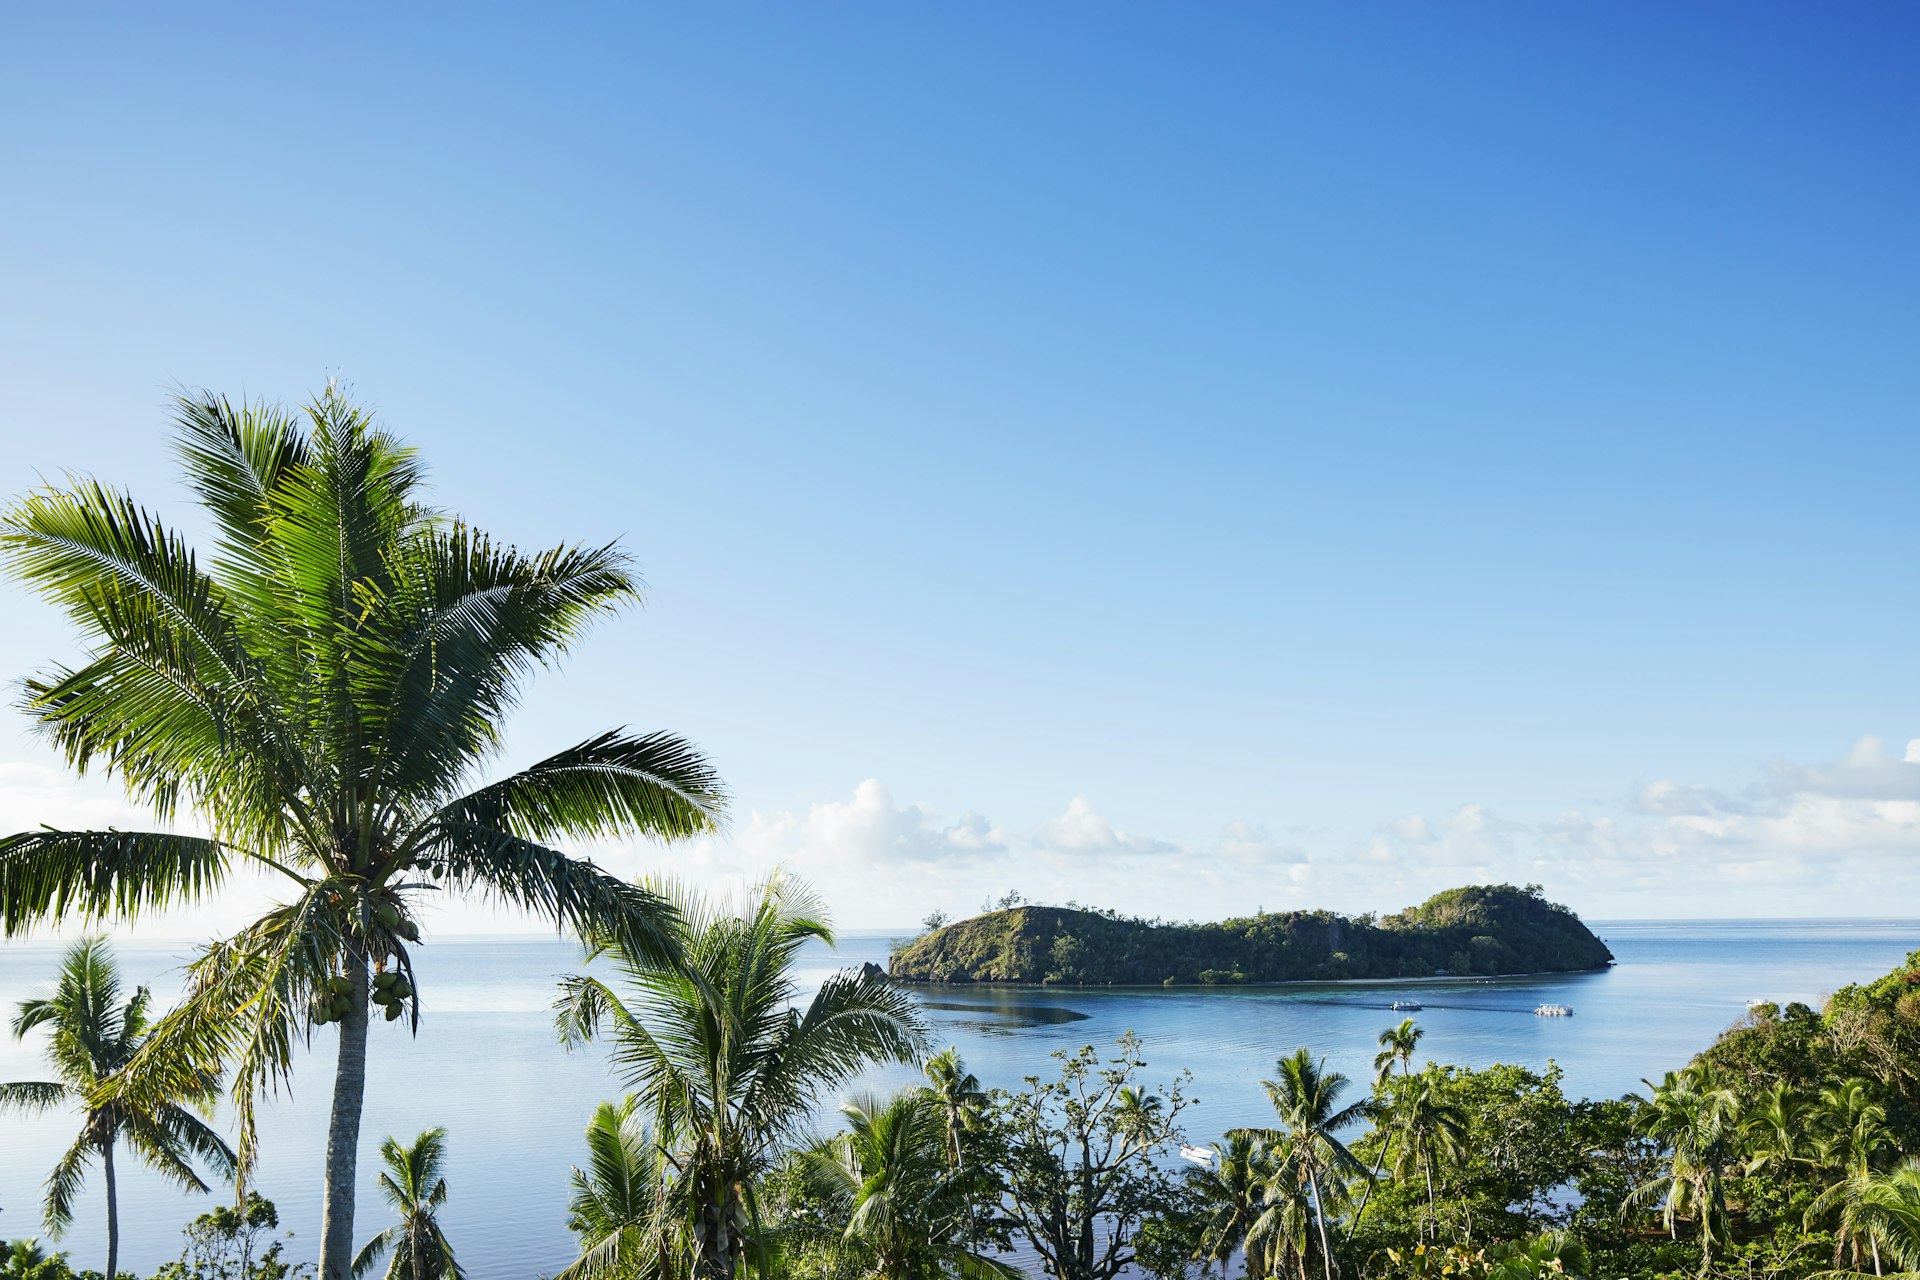 View of island from Matava resort, Kadavu, Fiji 